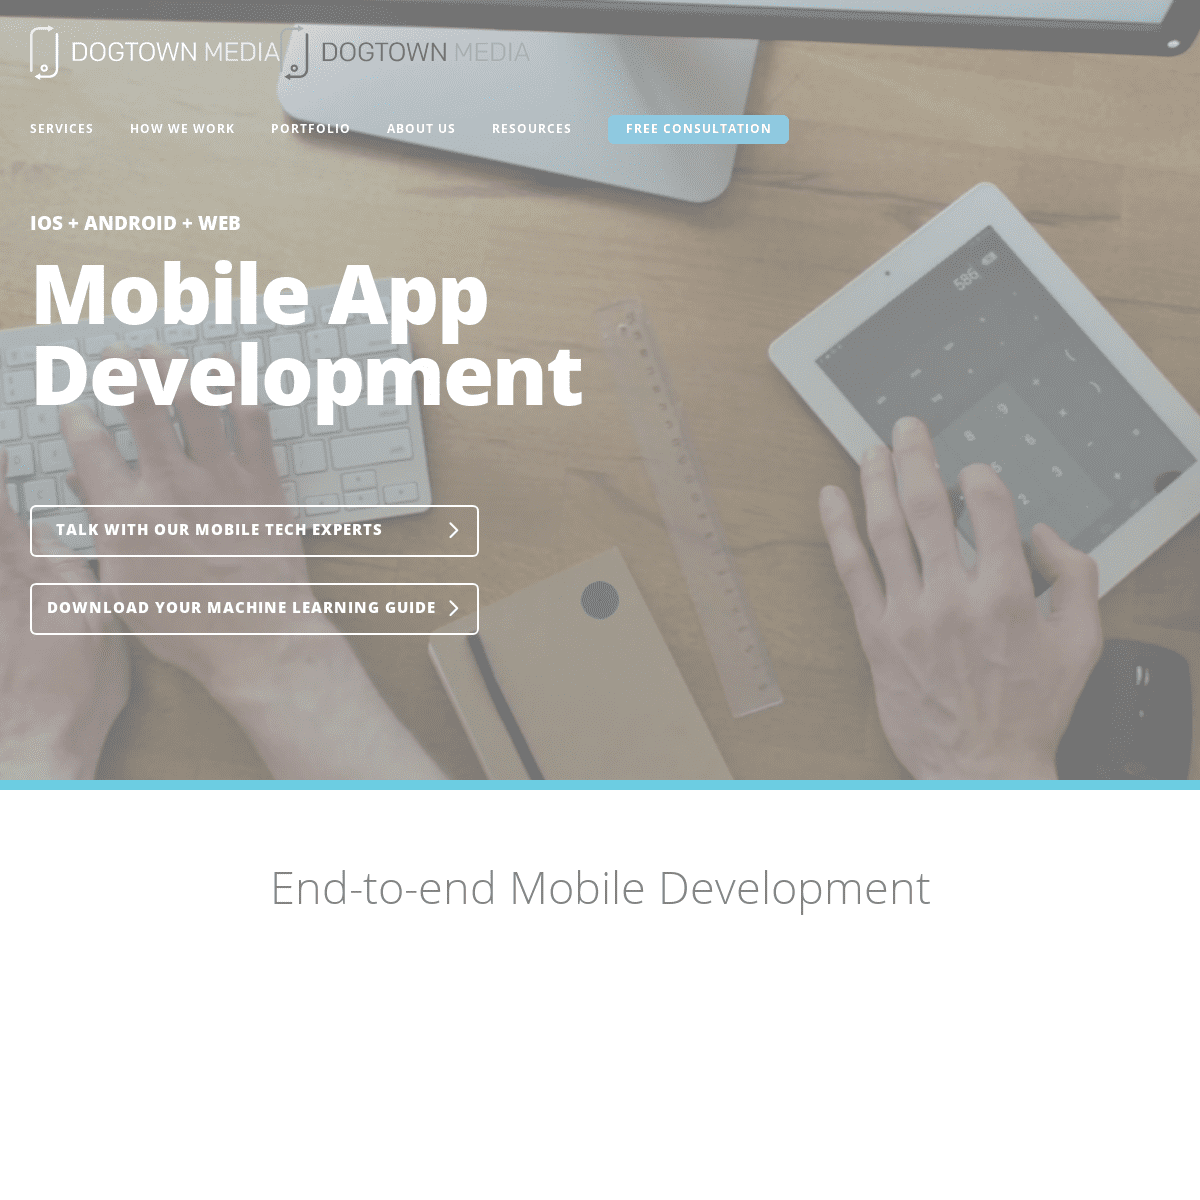 Mobile App Development Company | Dogtown Media